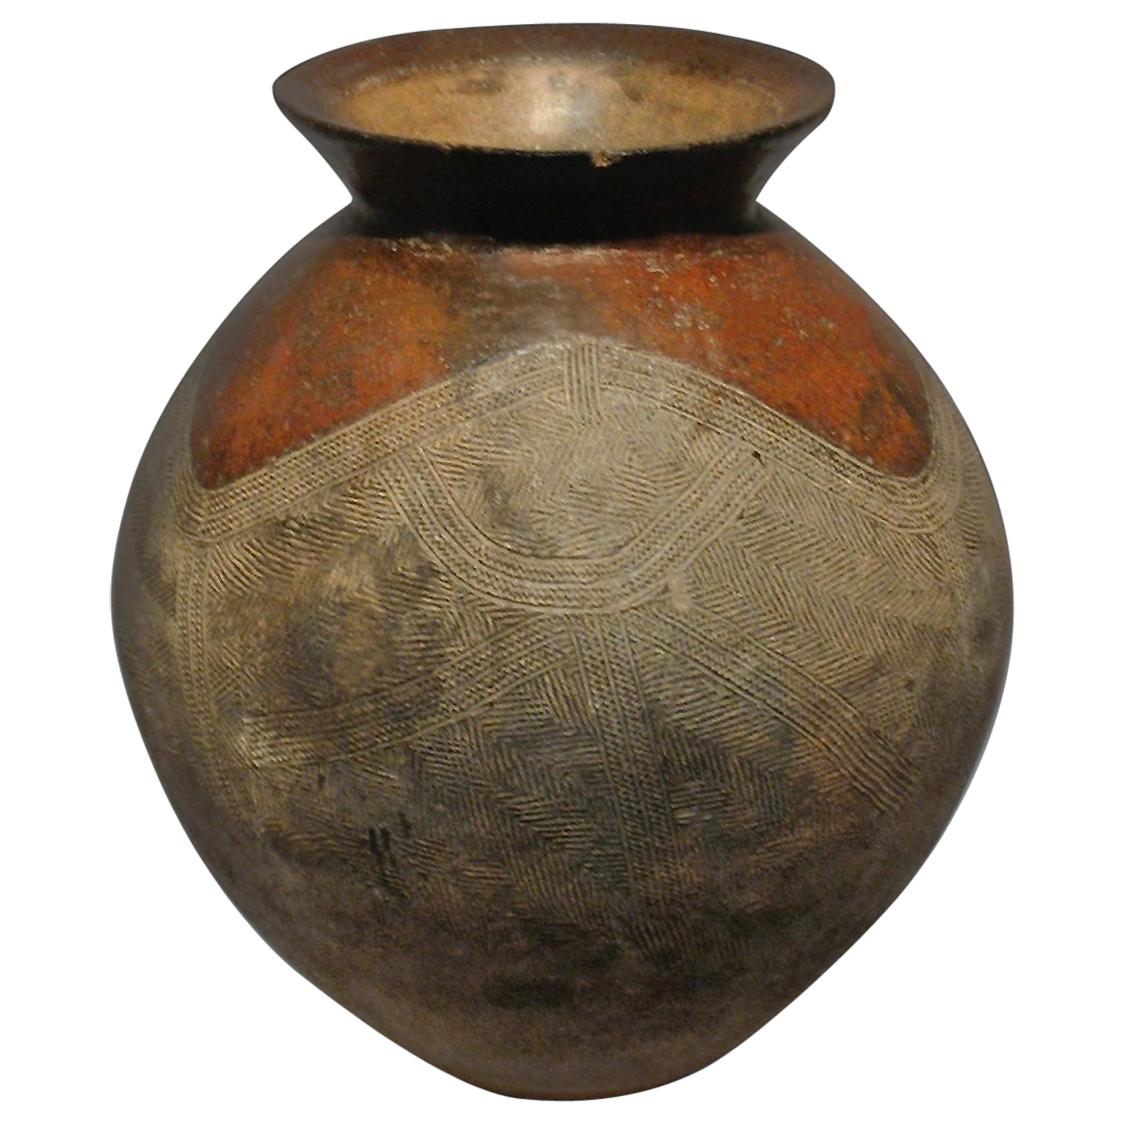 Mid-20th Century Tribal African Pot, Toussian Vessel, Burkina Faso